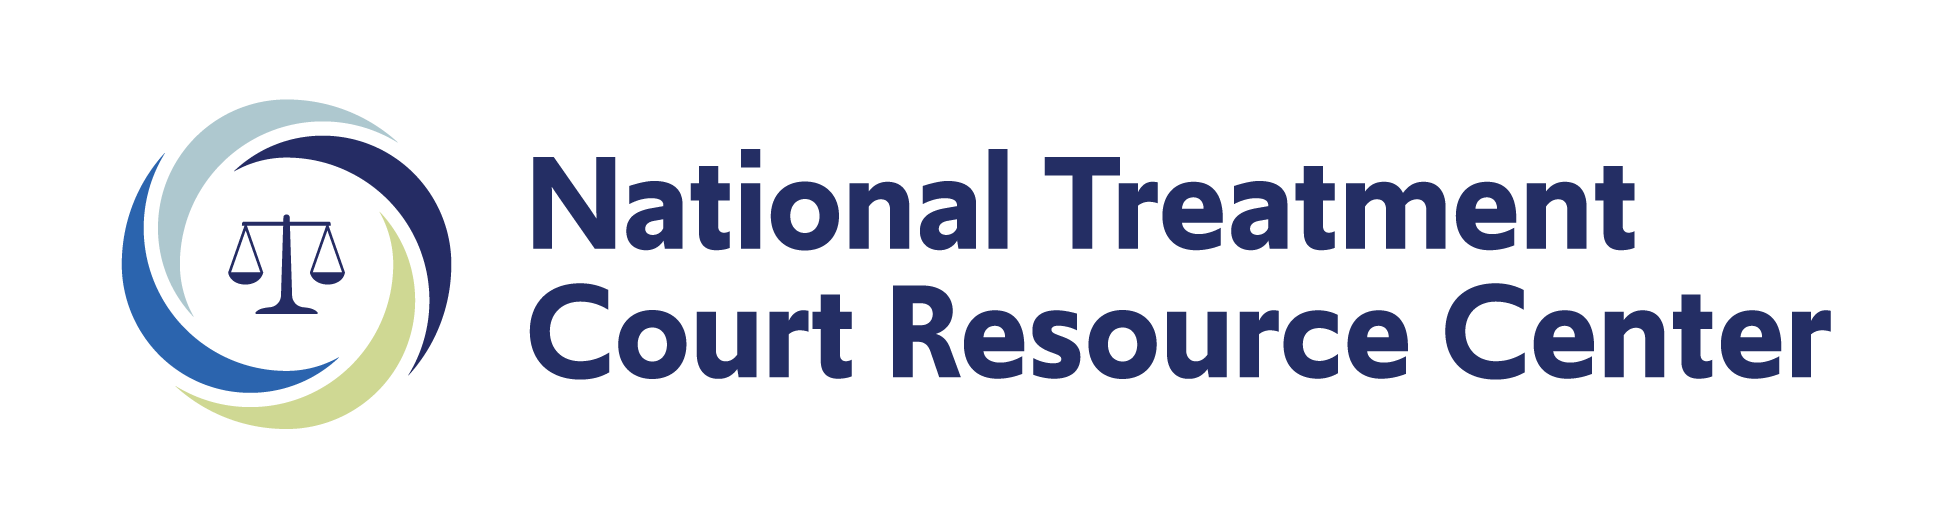 National Treatment Court Resource Center Logo